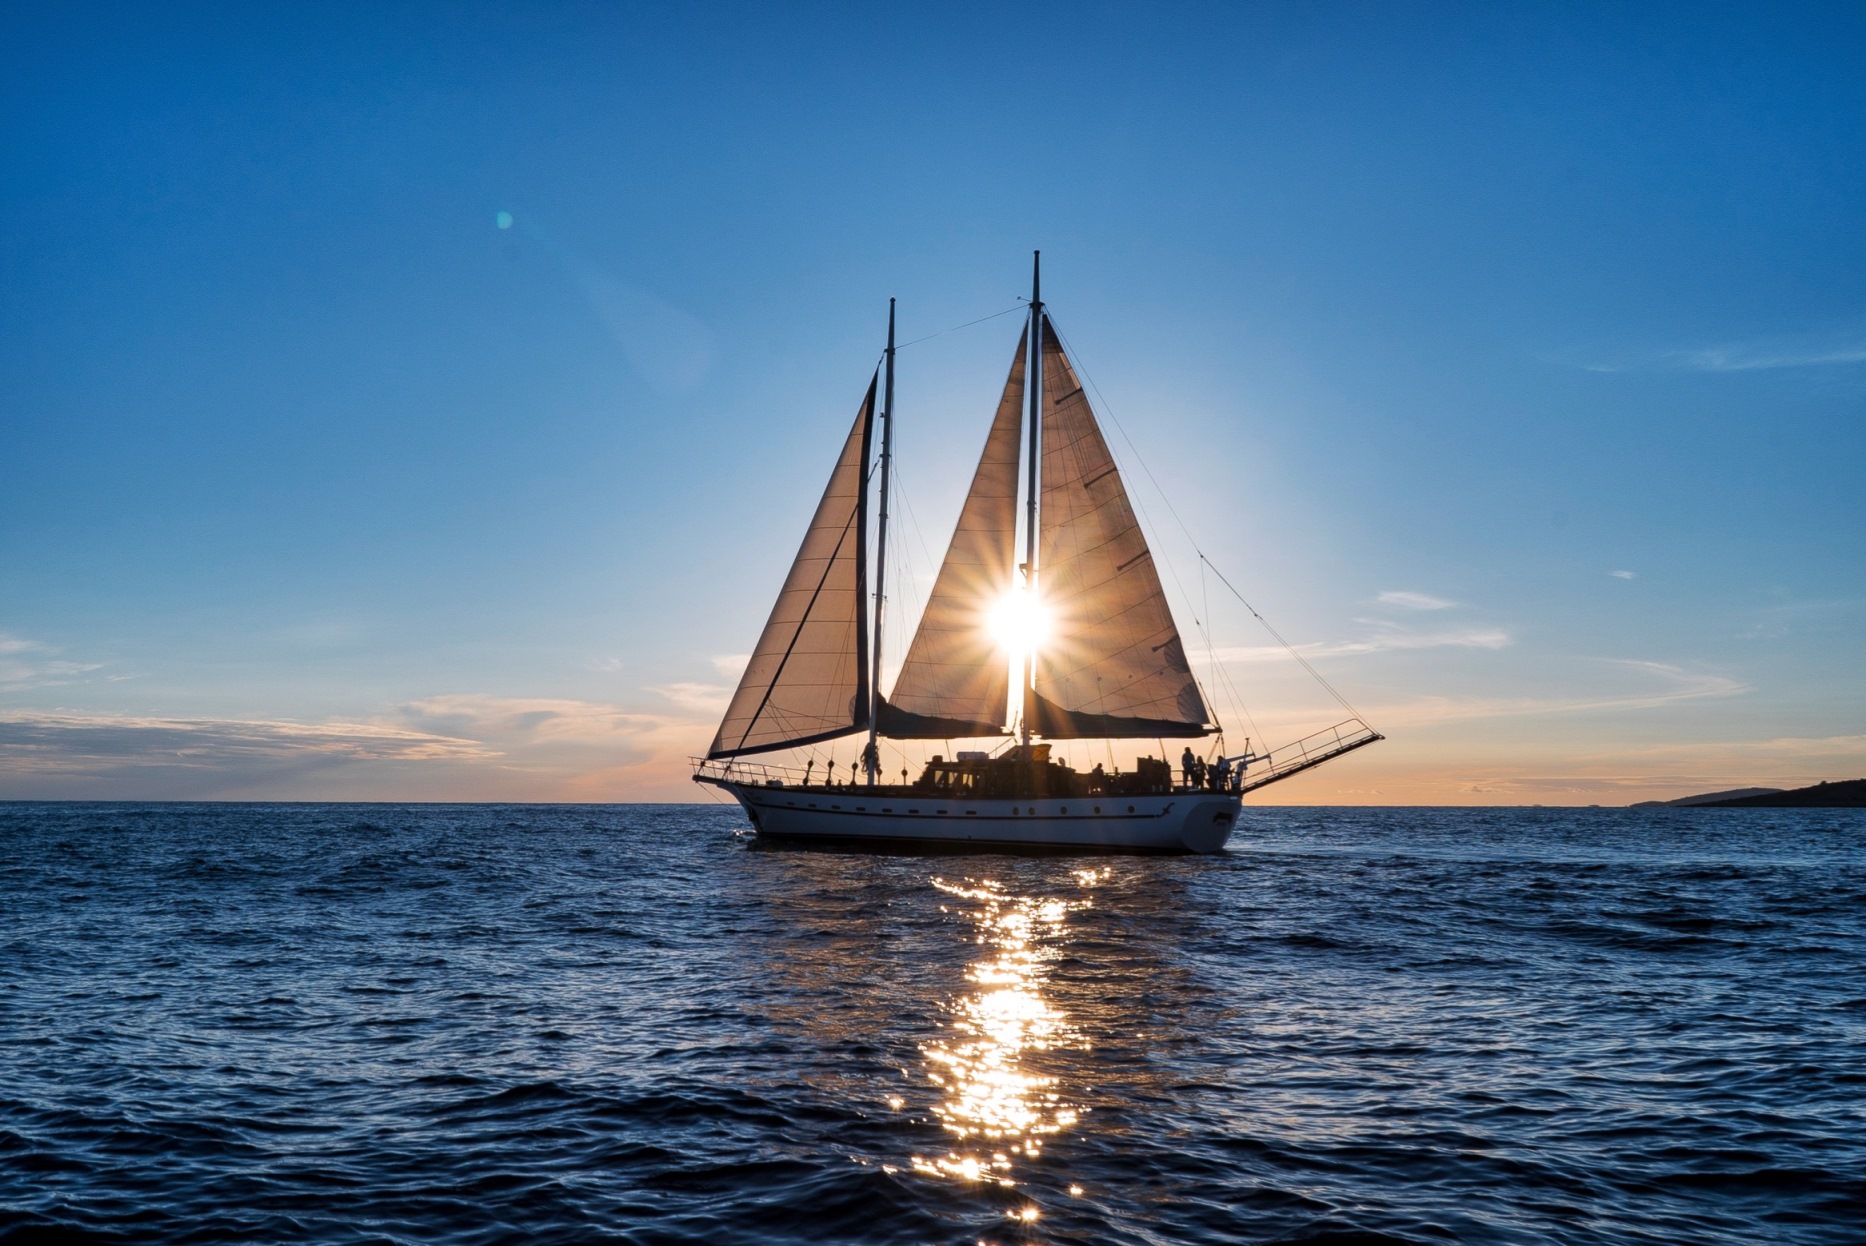 Sailing Yacht LUOPAN - At sunset